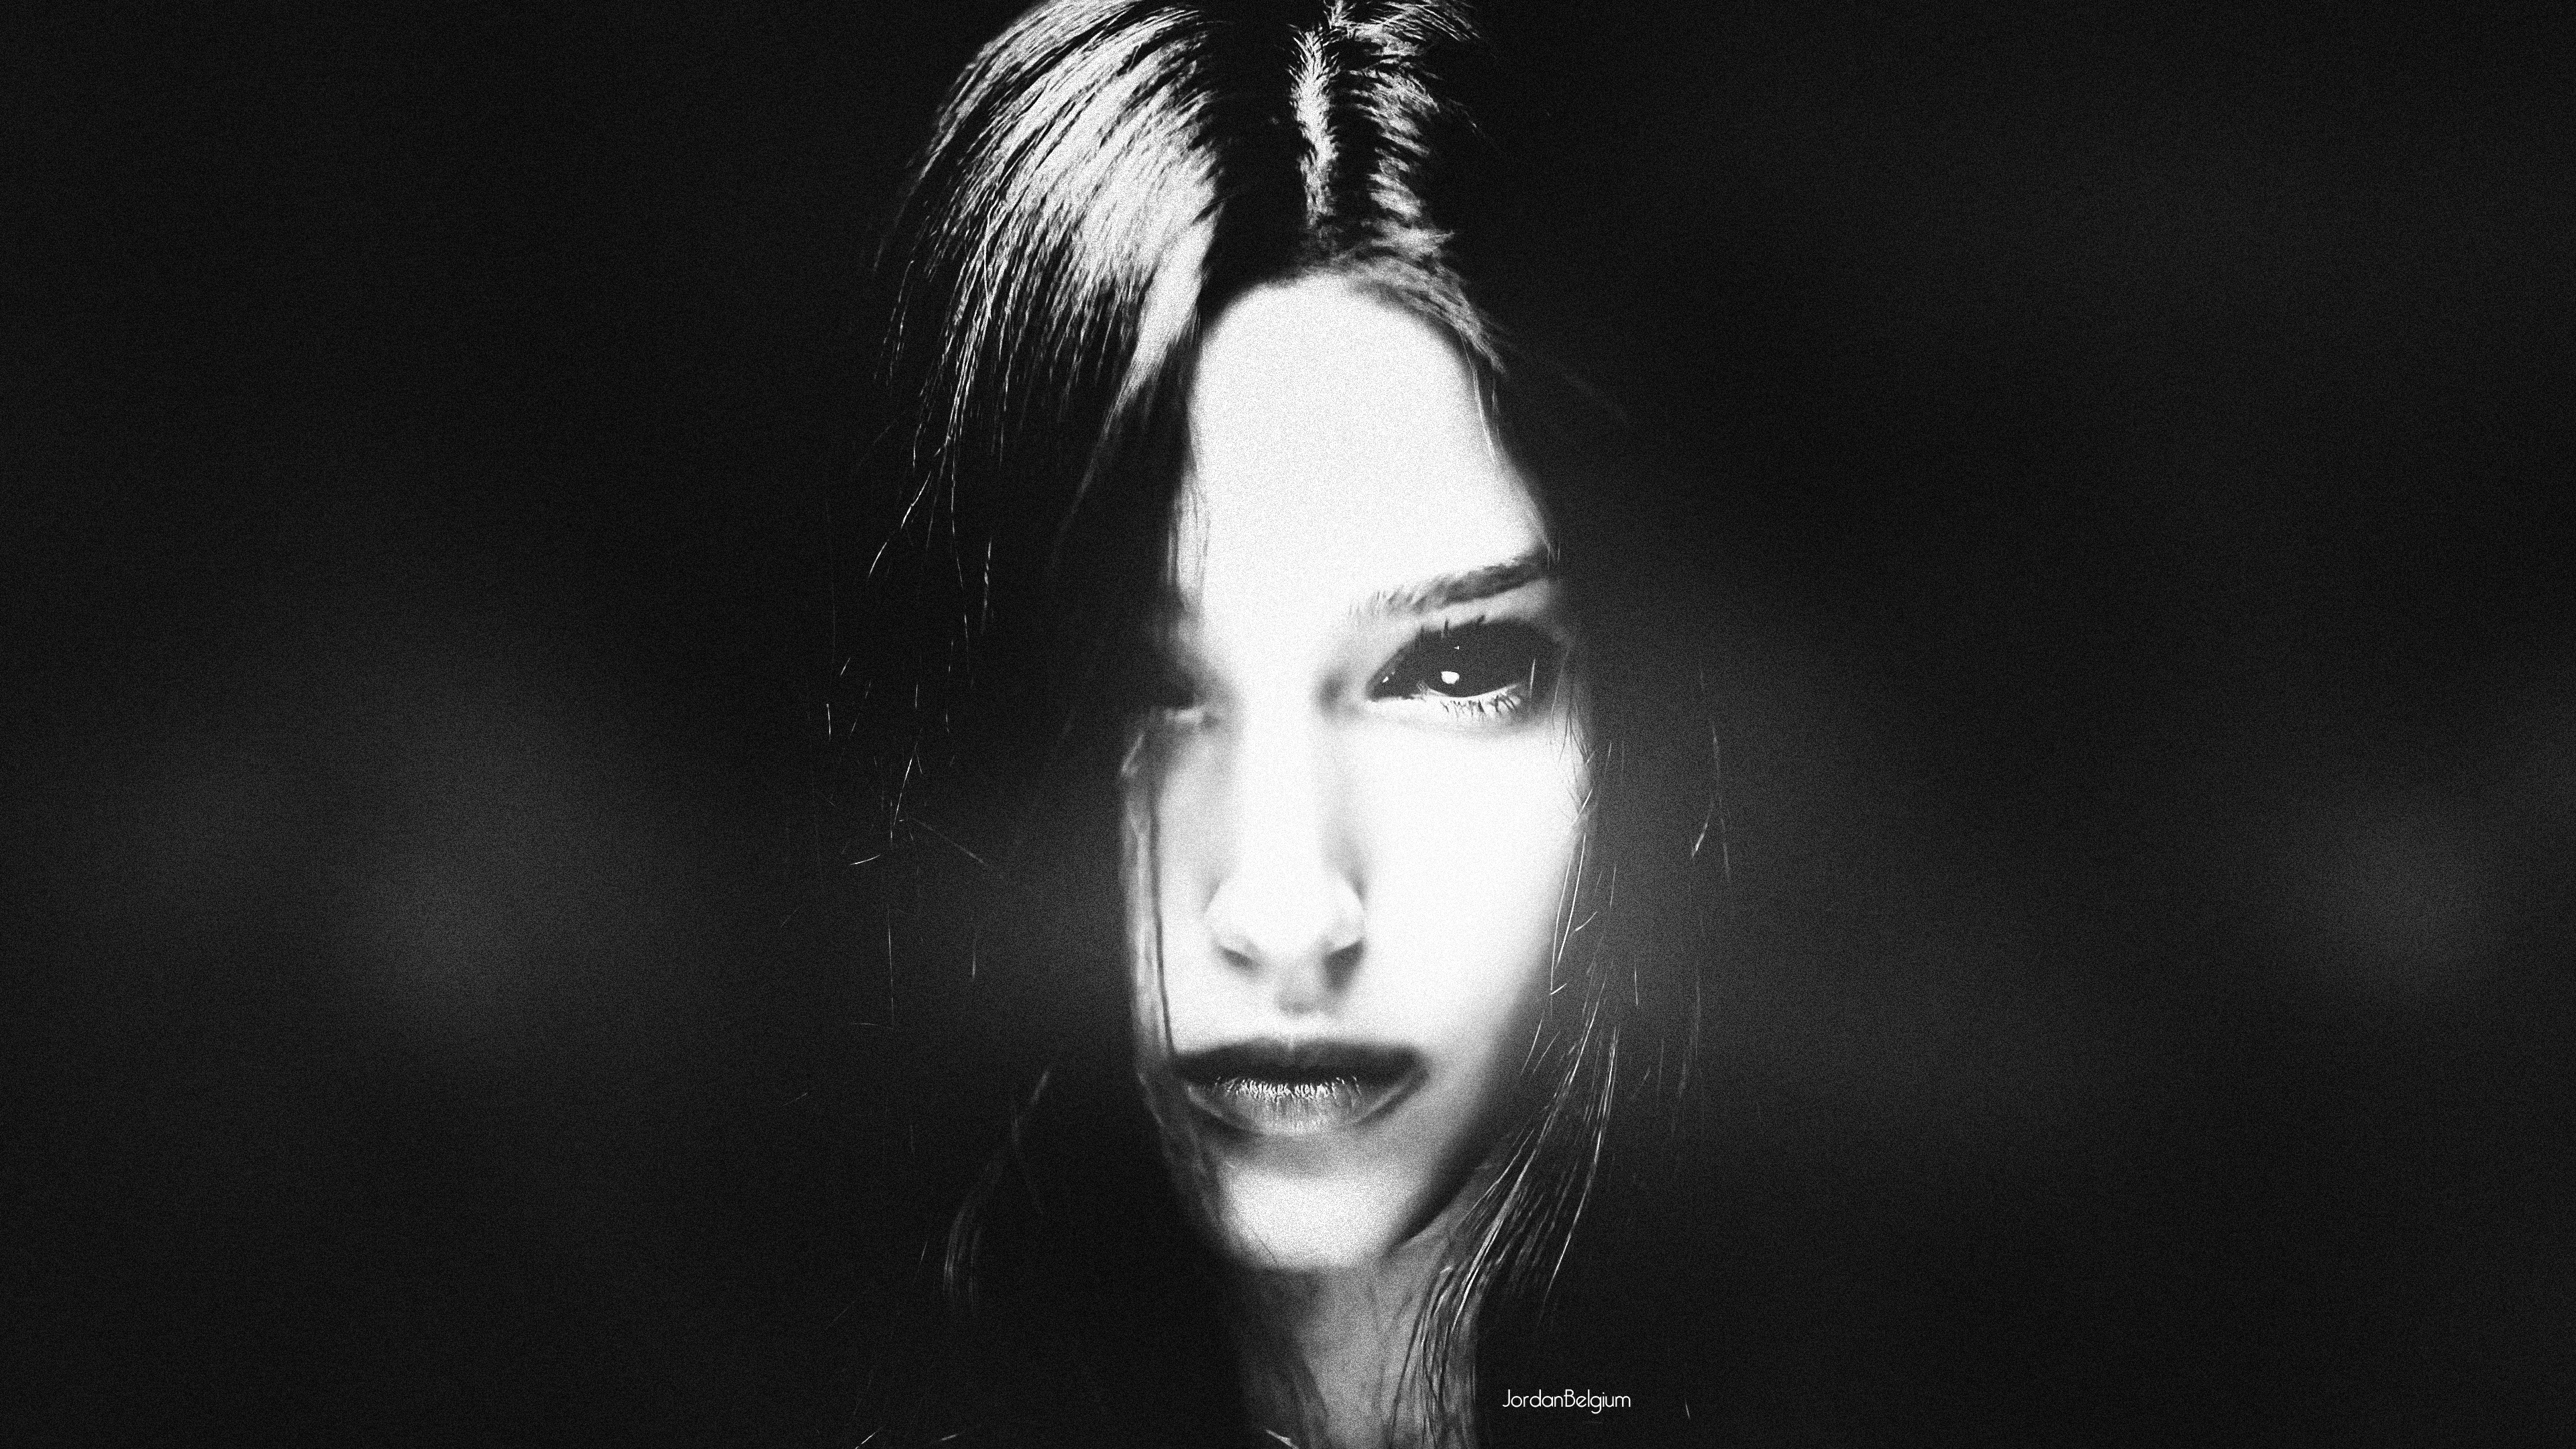 General 3840x2160 horror exorcism women photoshopped monochrome face simple background model jordan belgium dark eyes portrait